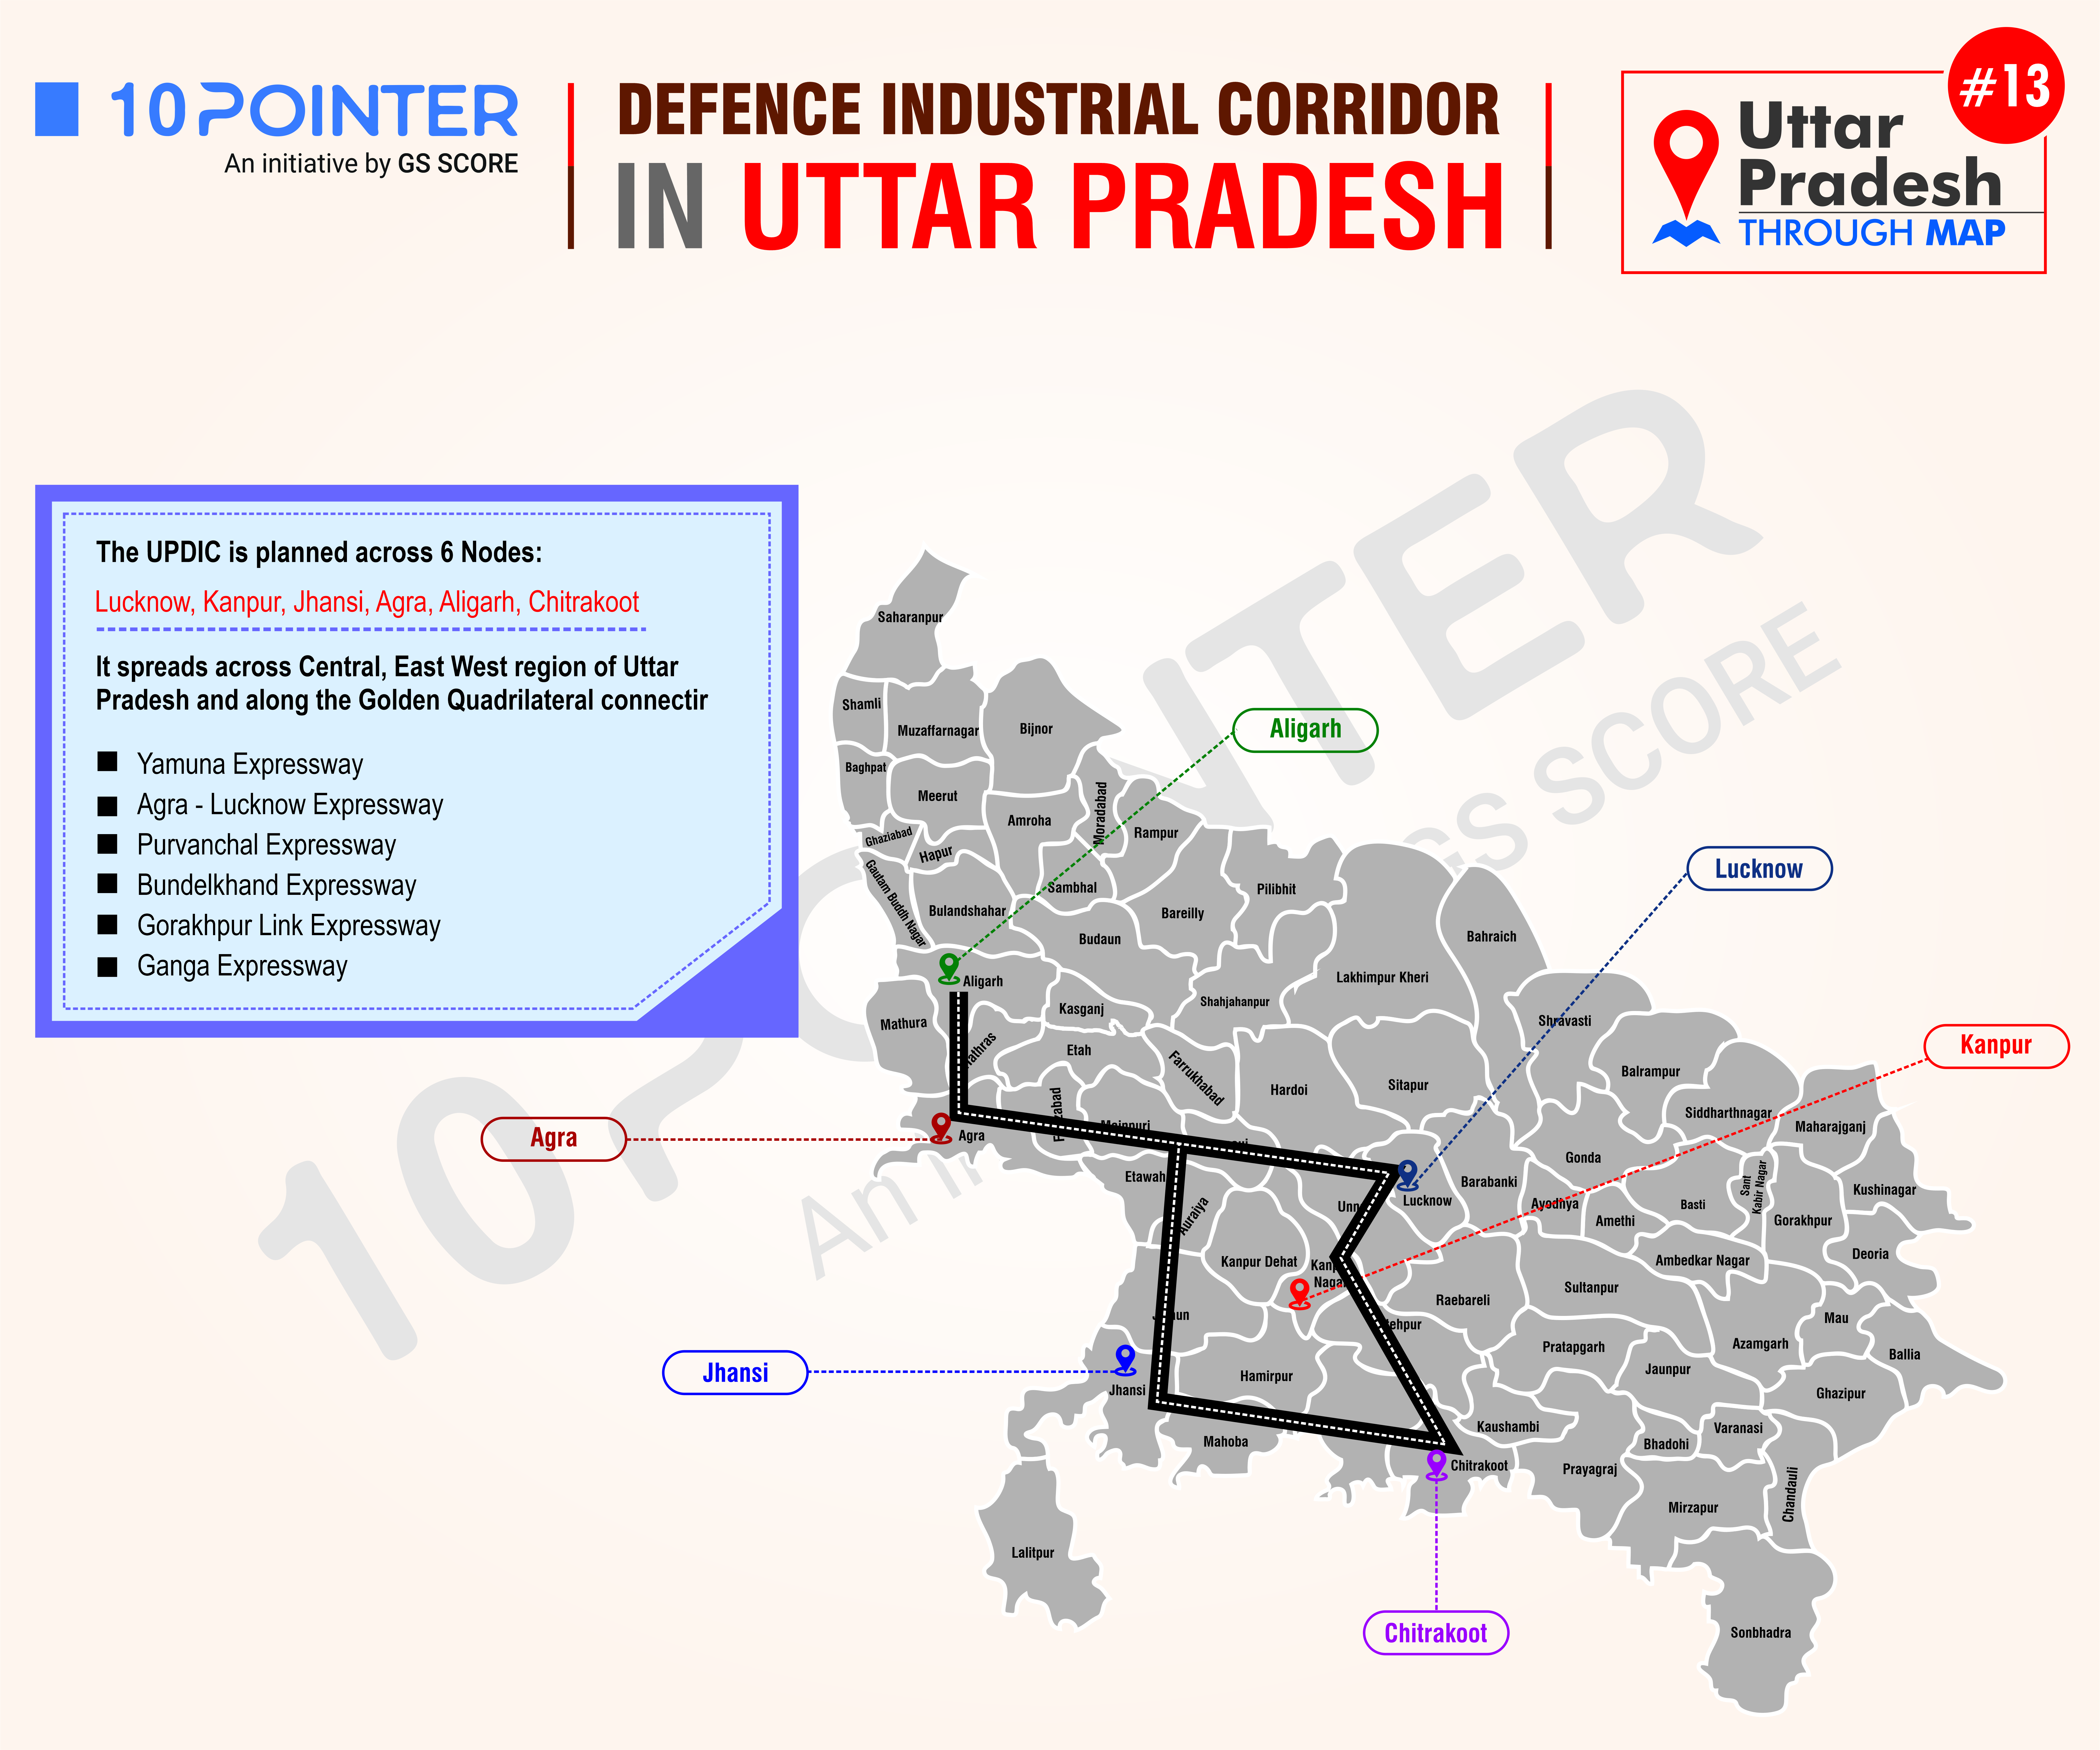 Defence Industrial Corridor in Utter Pradesh